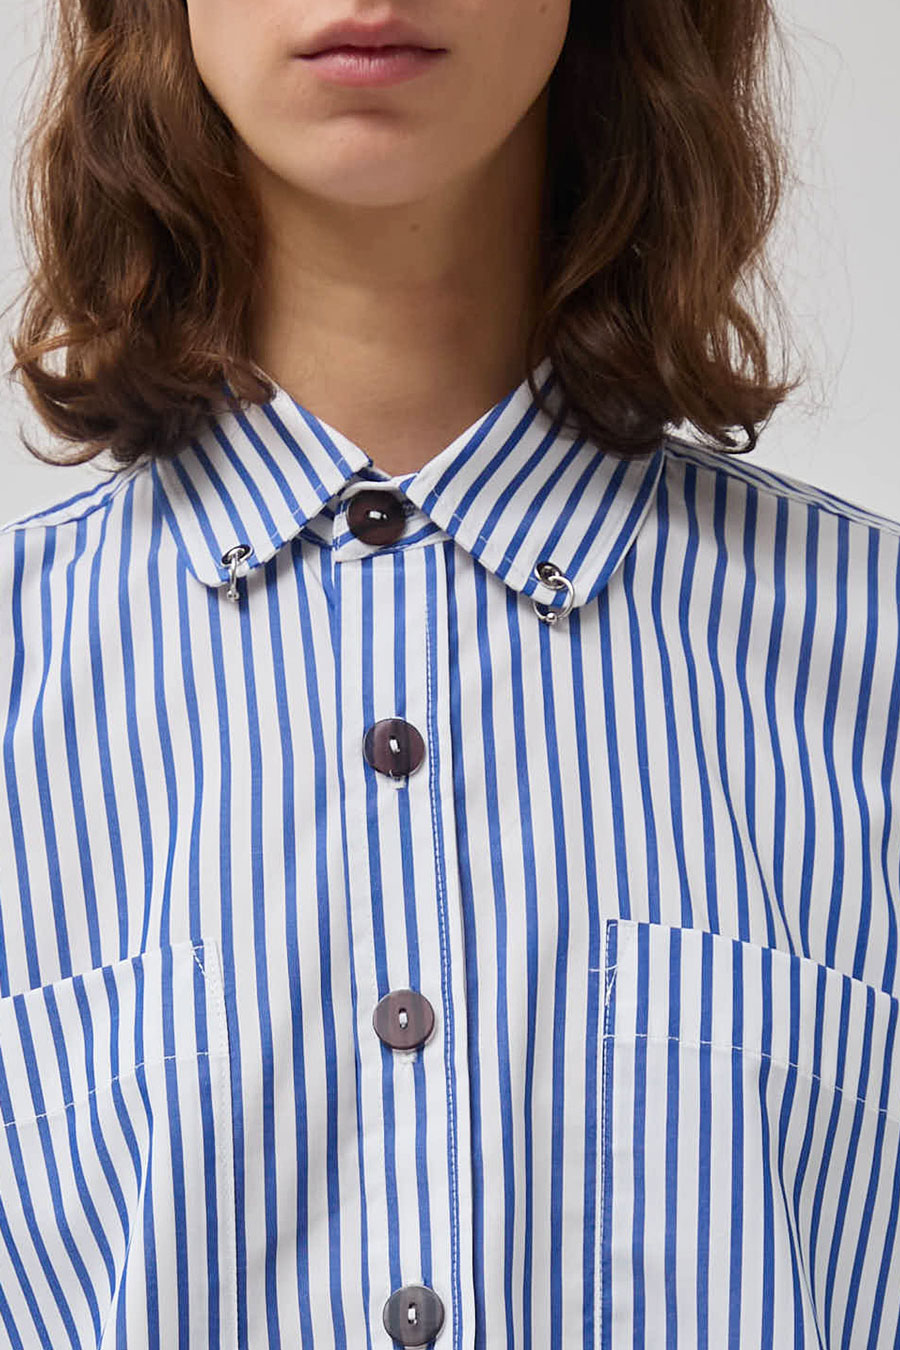 KkCo Pierced Double Button Up Shirt in Mixed Sea Stripe